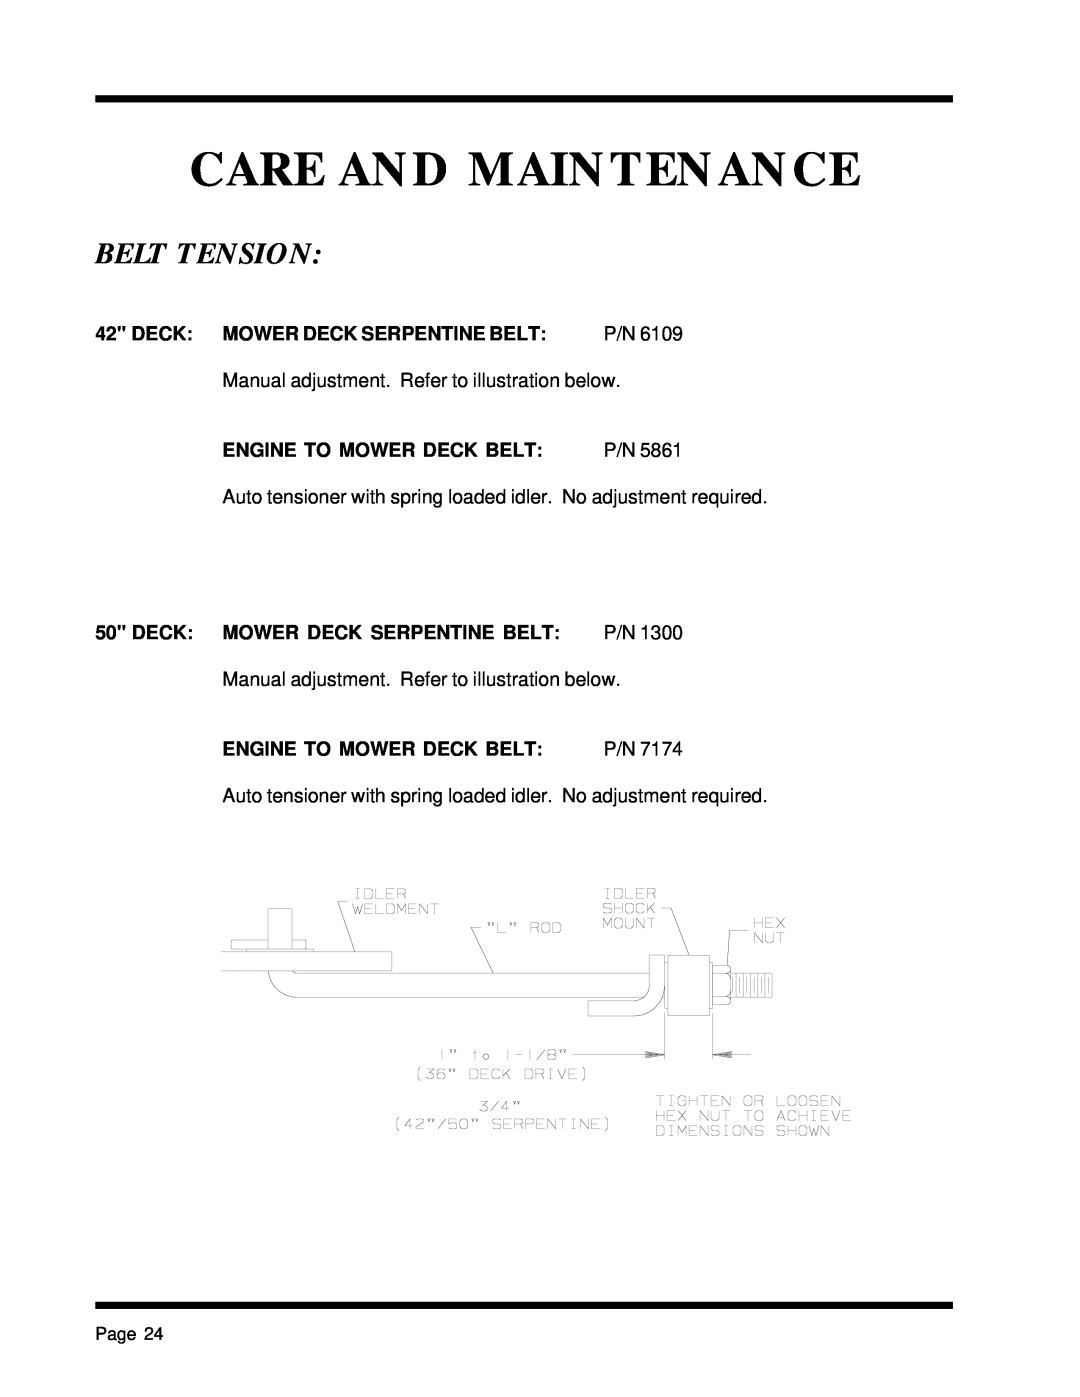 Dixon 13088-1100A Belt Tension, Care And Maintenance, Deck Mower Deck Serpentine Belt, Engine To Mower Deck Belt, Page 